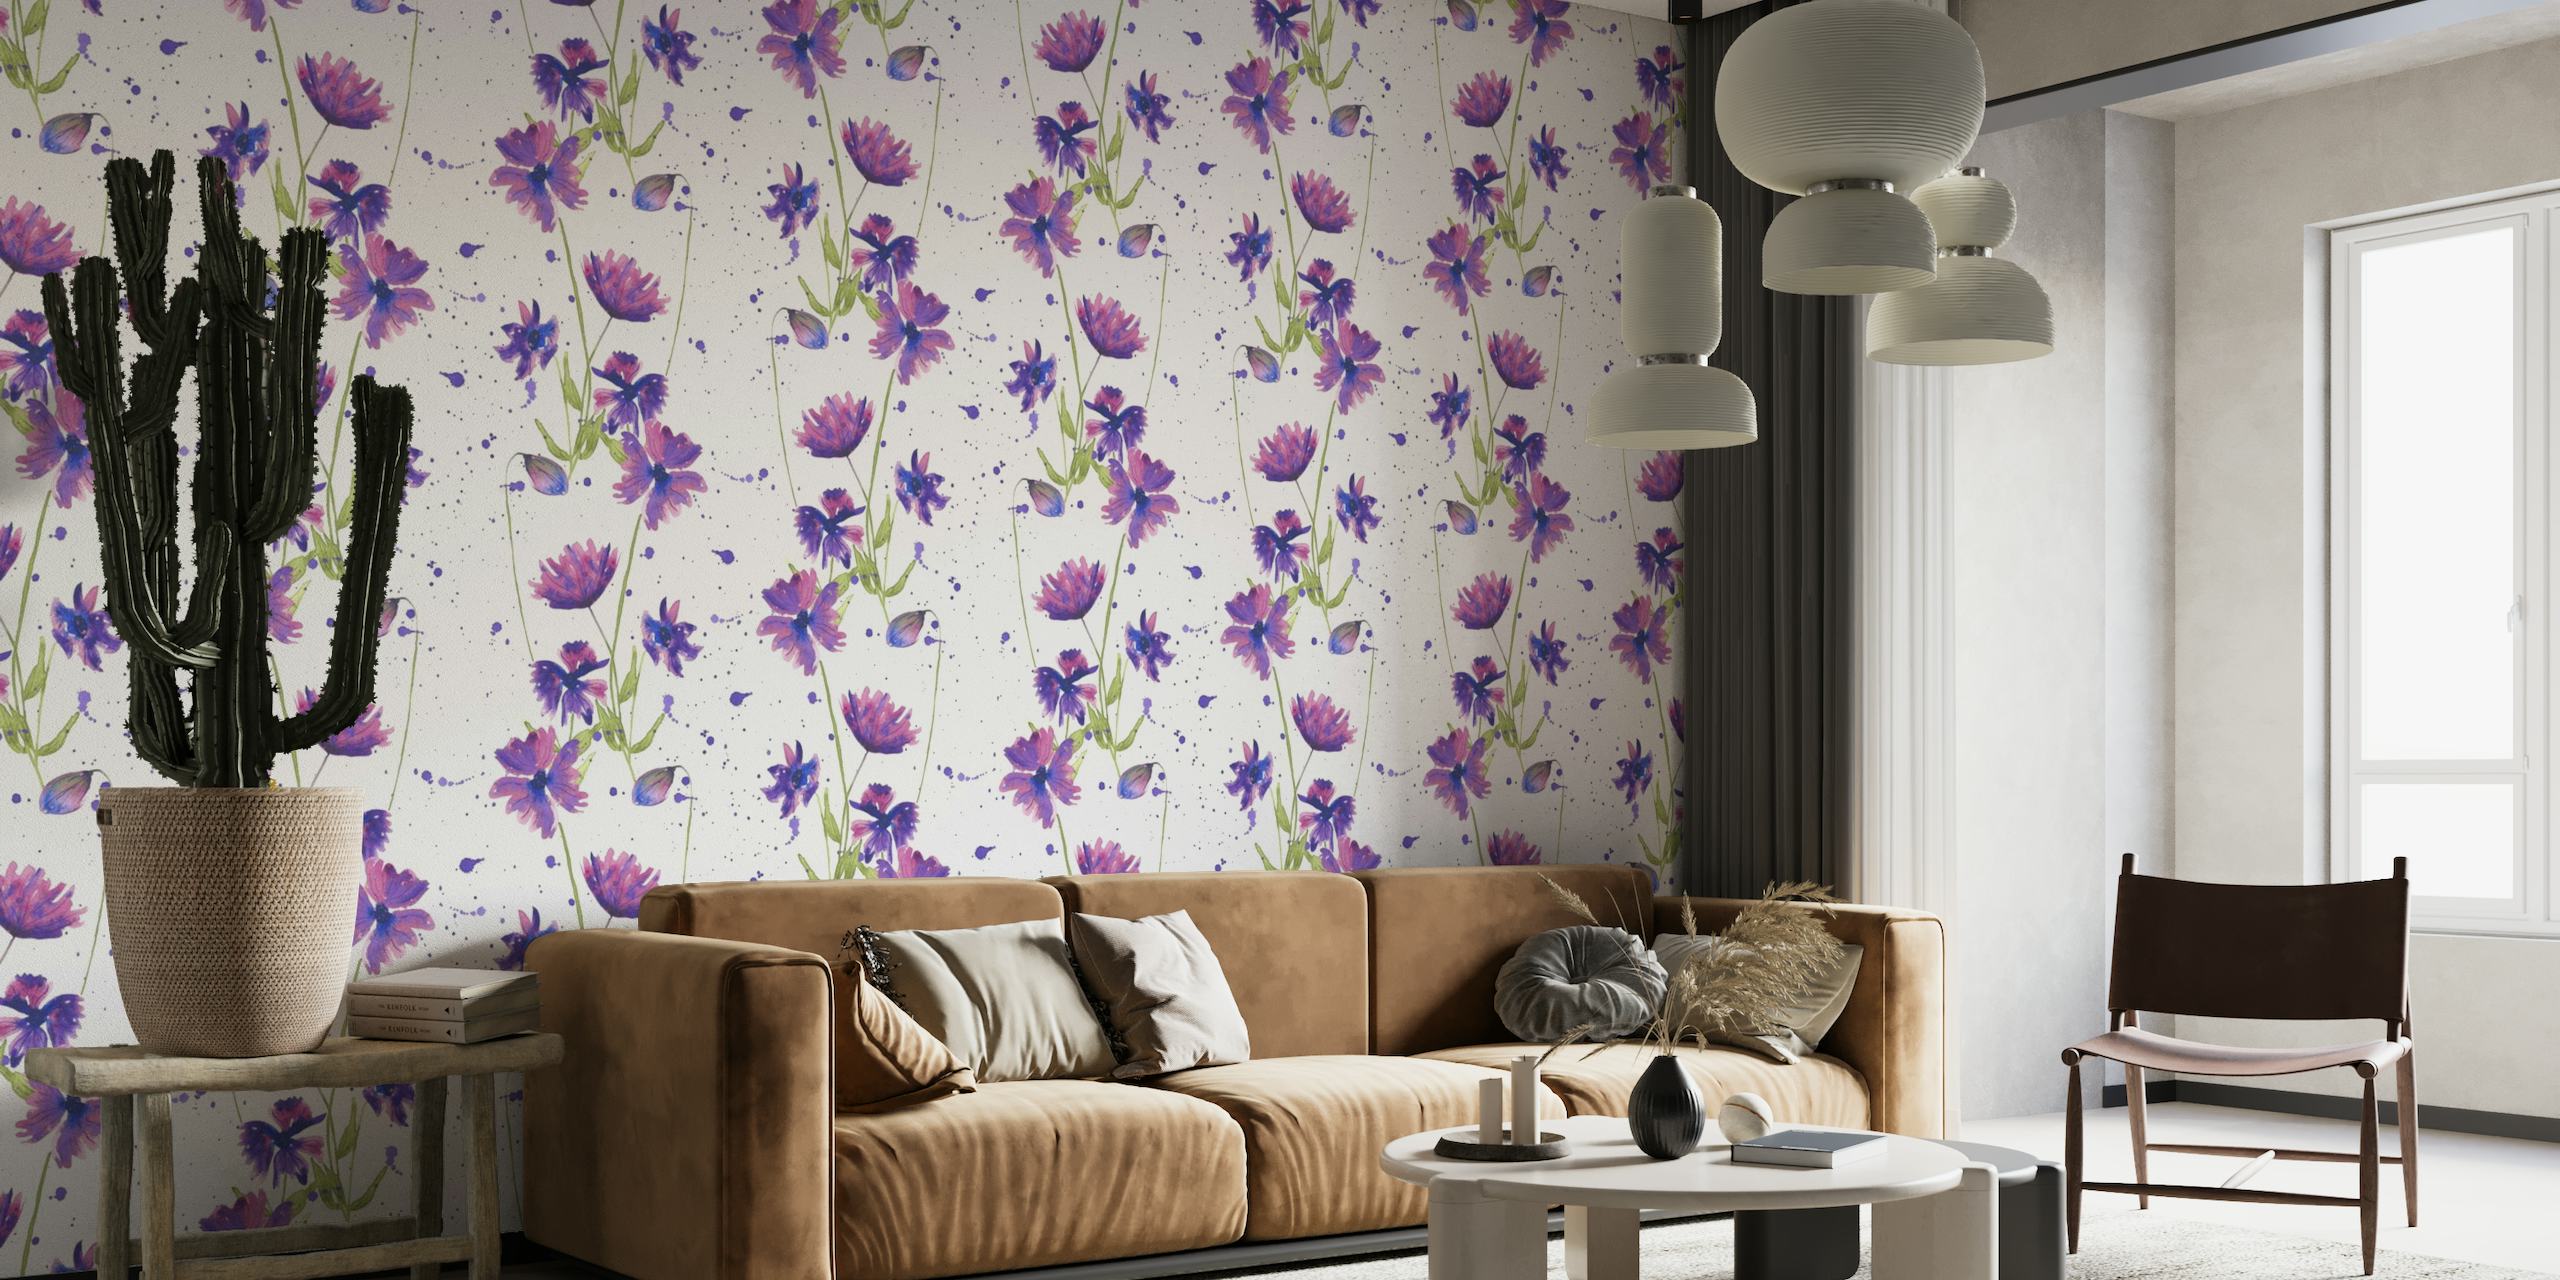 Loose Purple Watercolor Flowers wallpaper